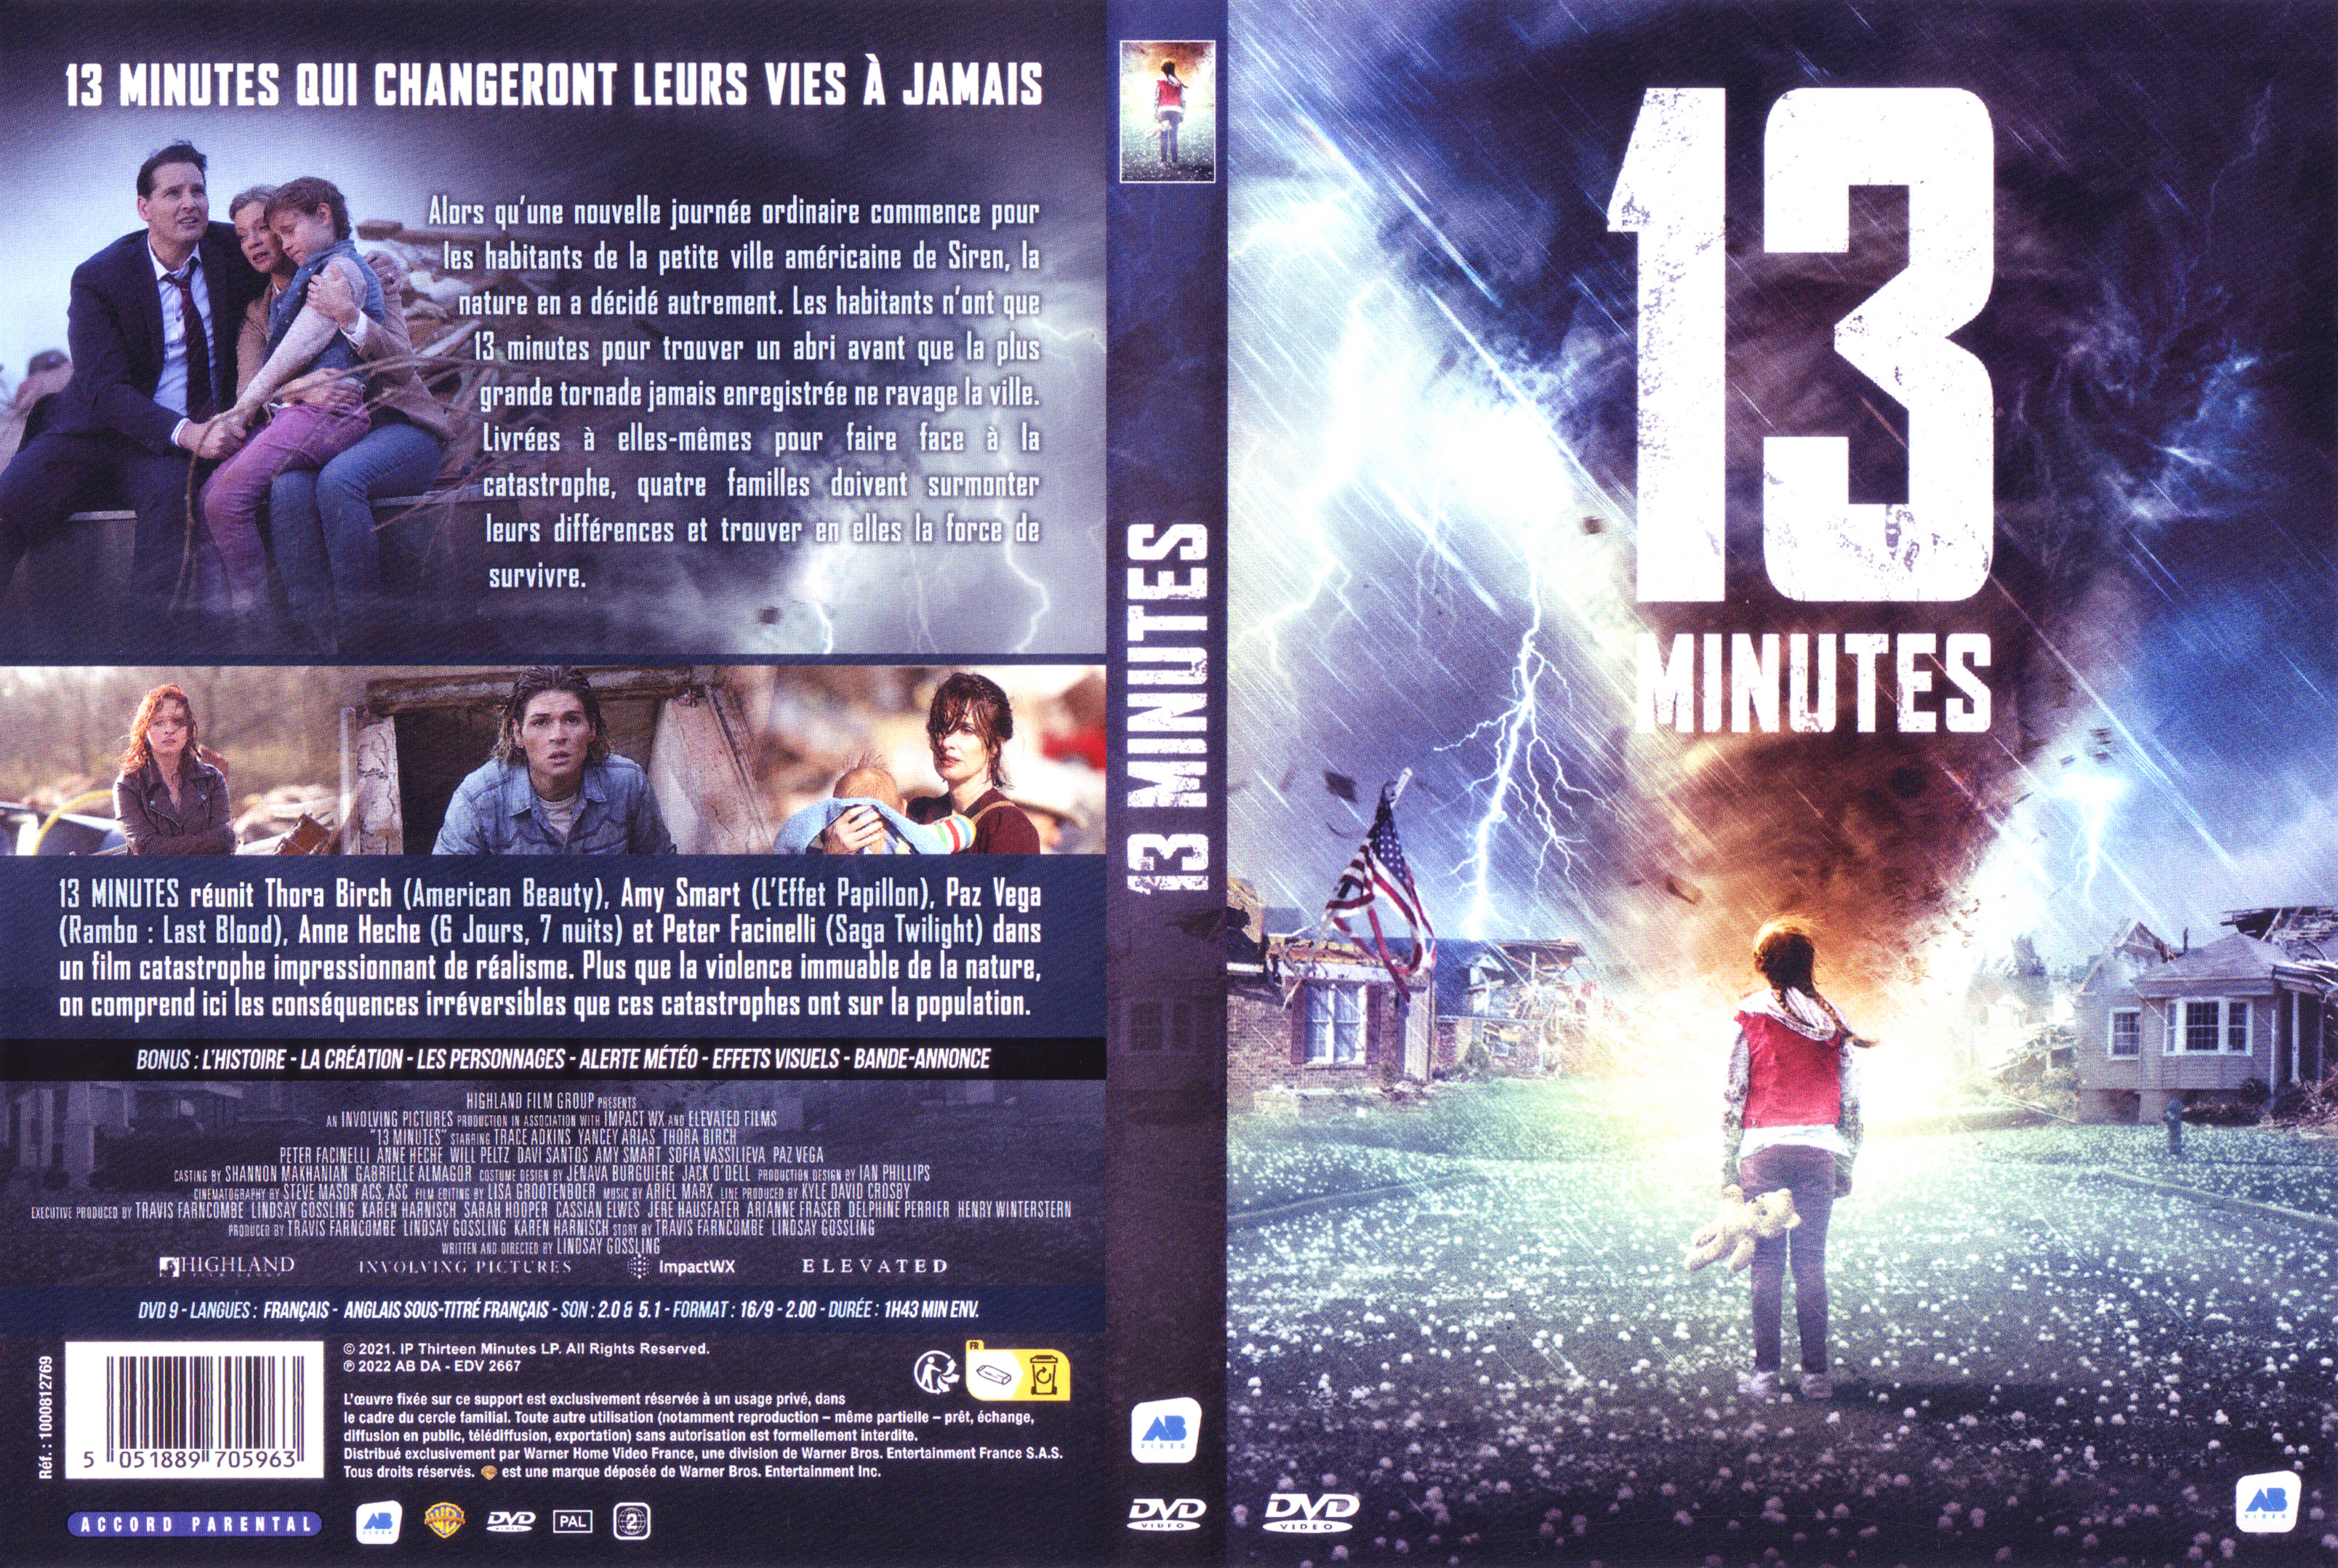 Jaquette DVD 13 minutes